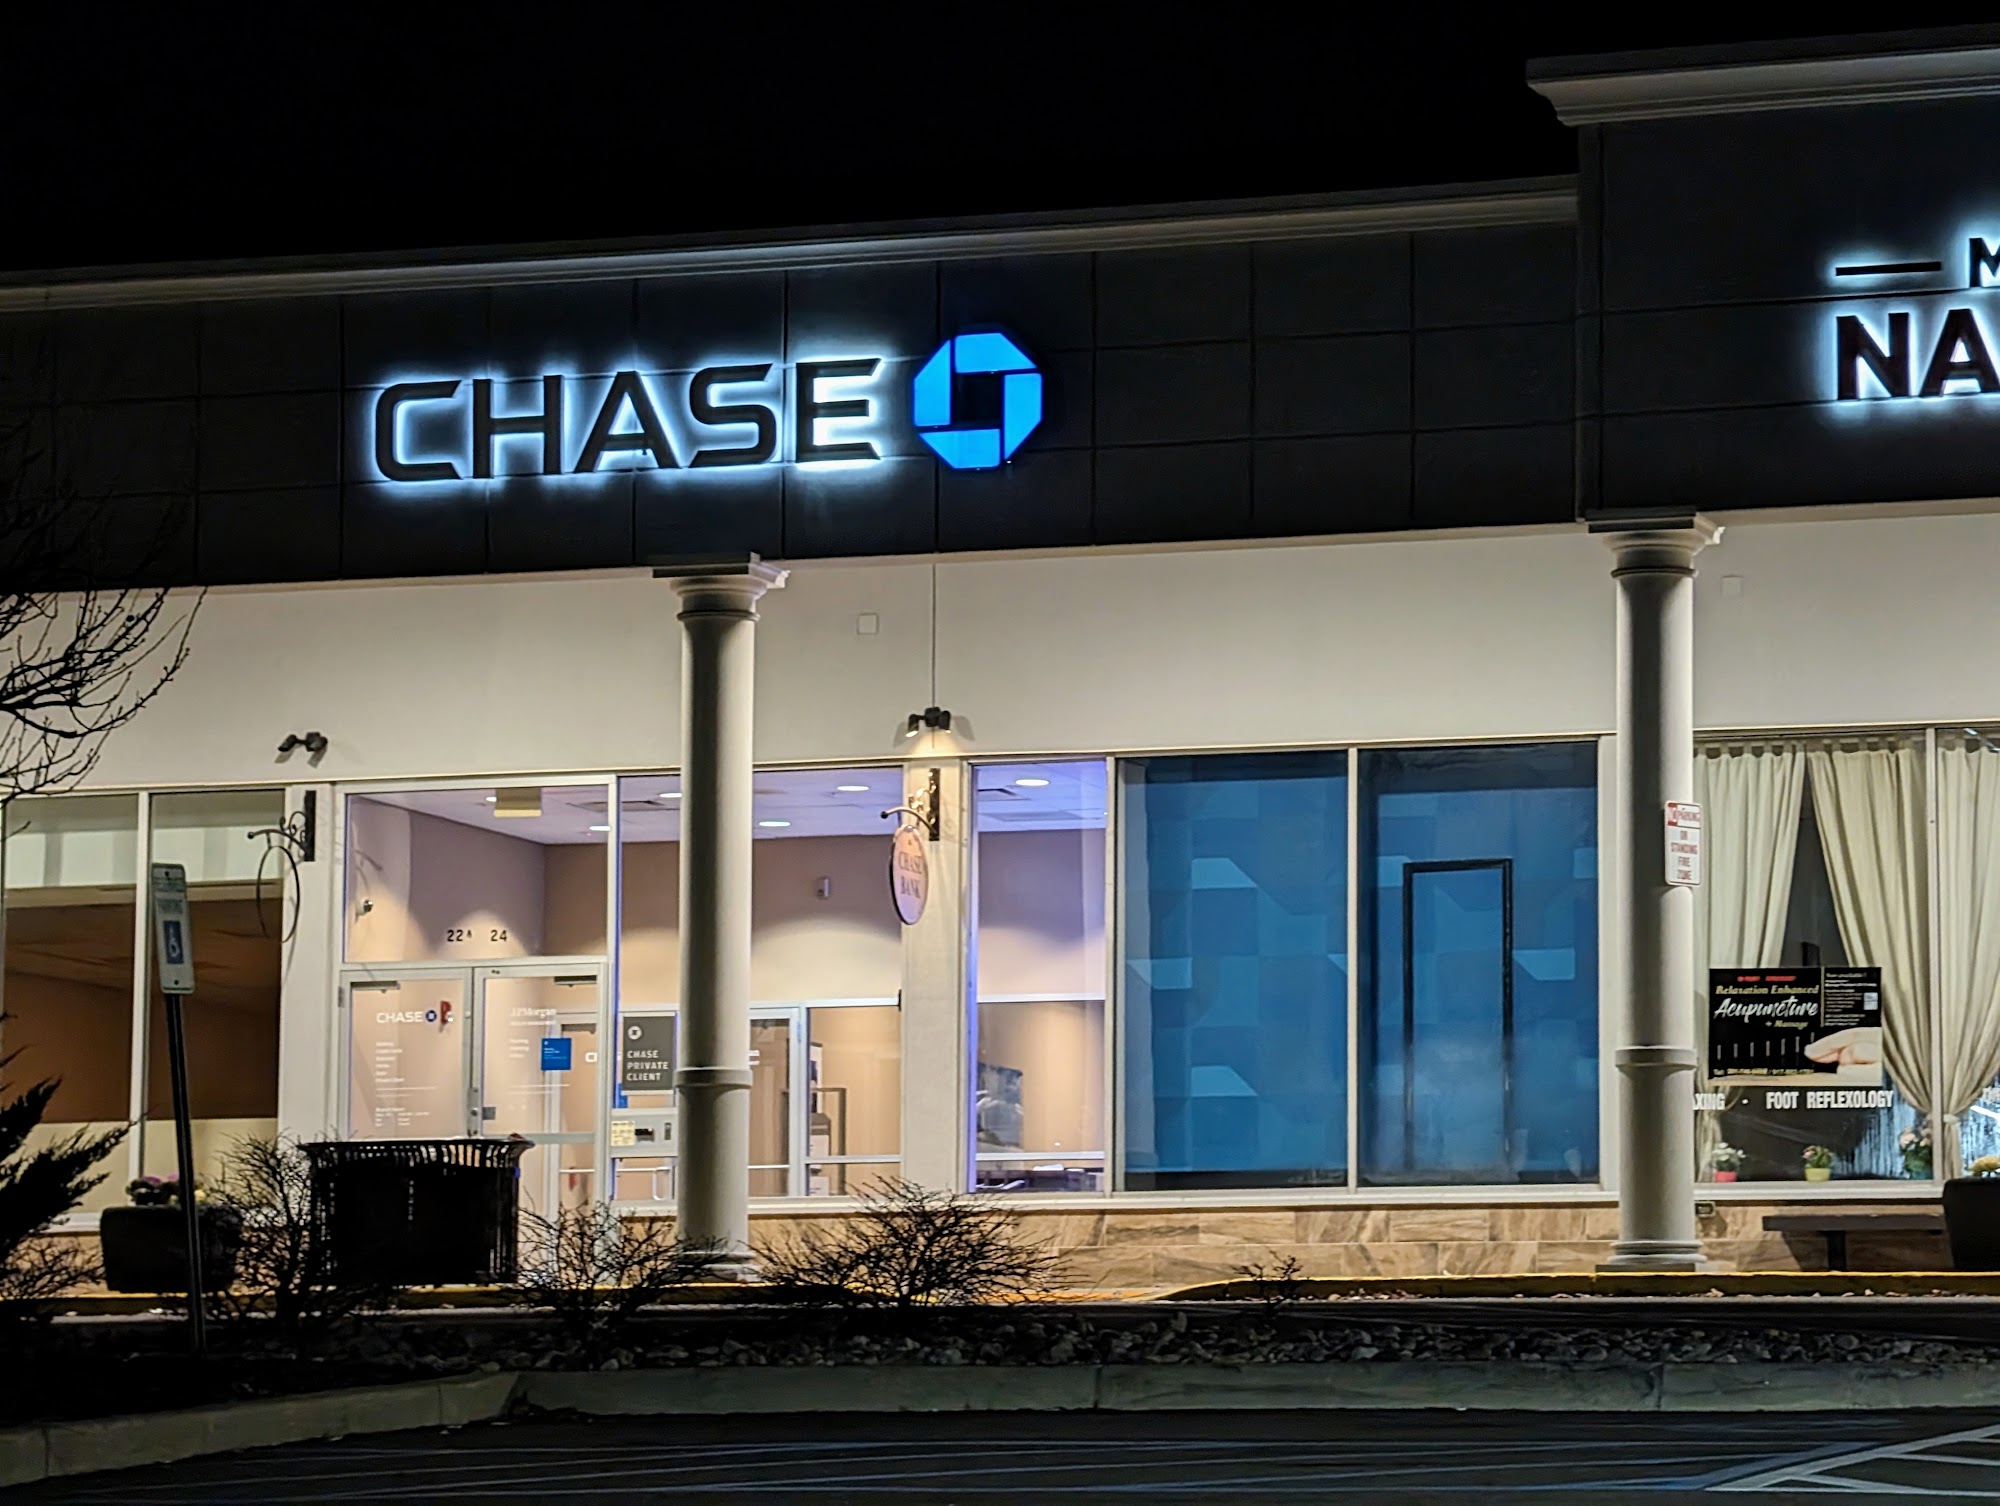 Chase Bank